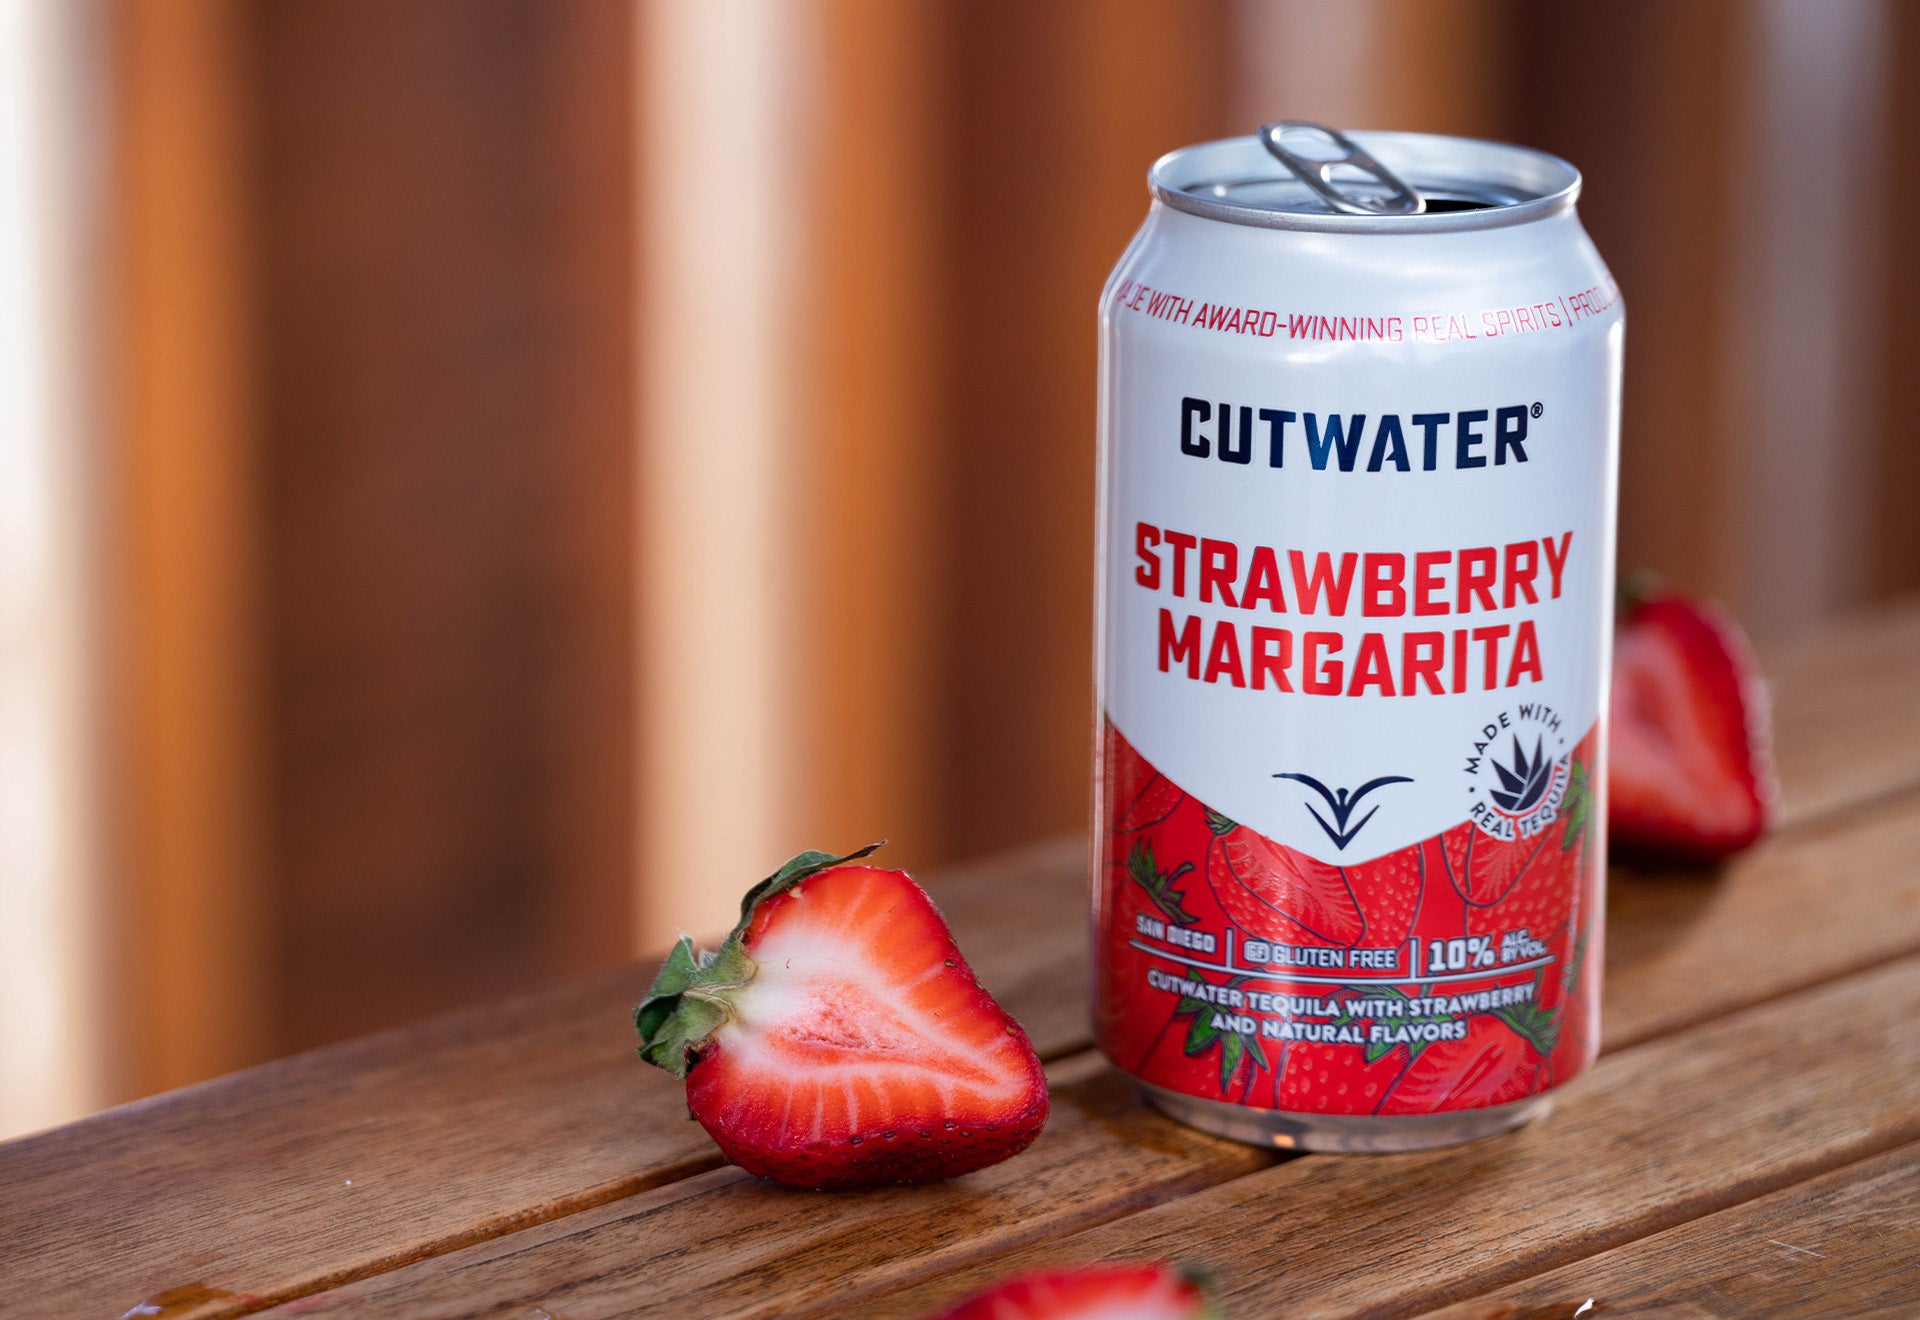 Cutwater Strawberry Margarita 4 pack